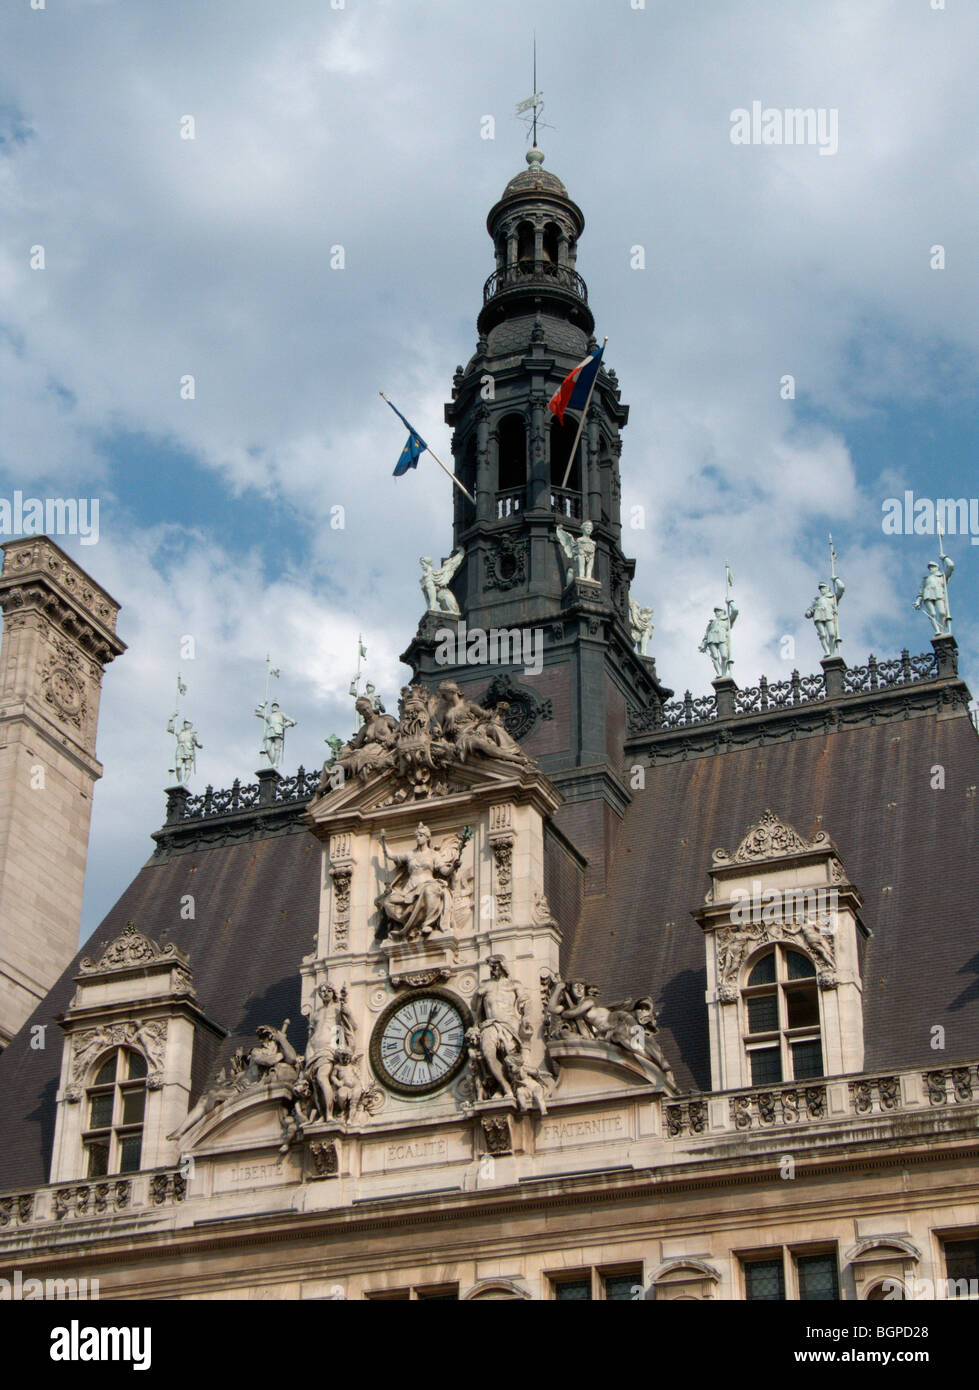 Hôtel de Ville (City Hall). Rebuilt in 1870's in its original French Renaissance style from 16th century. Paris. France Stock Photo